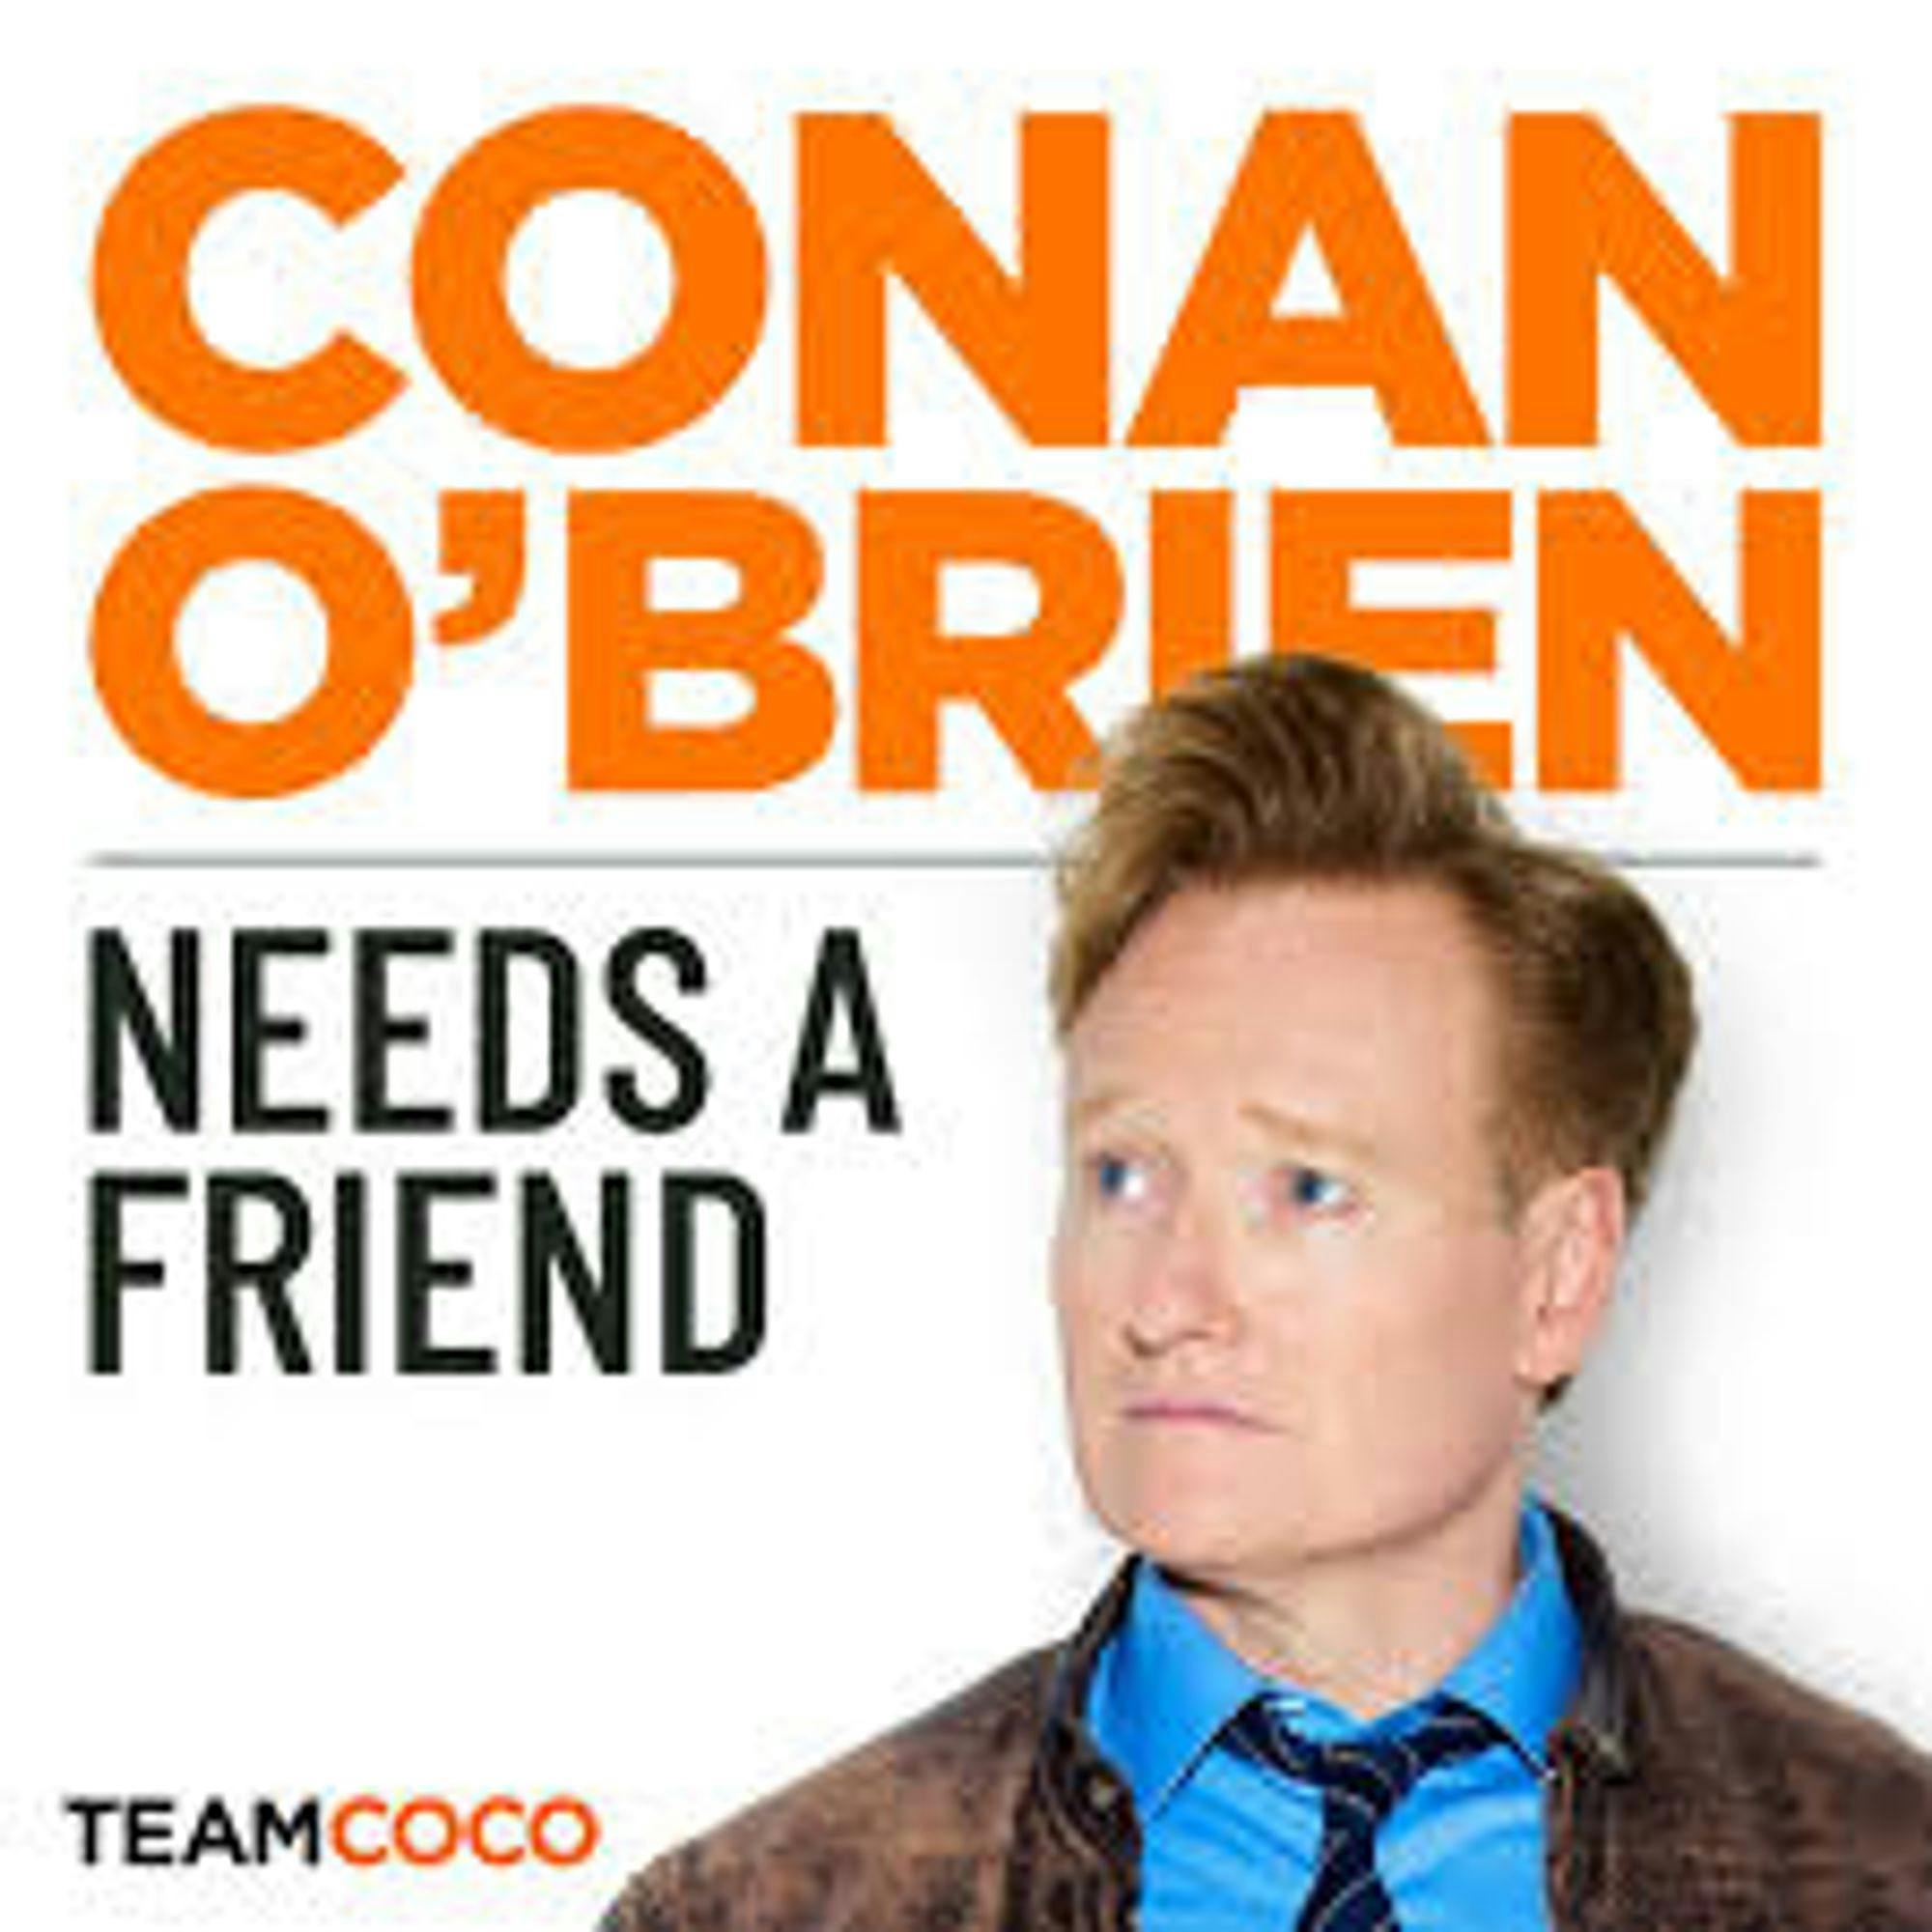 Conan O’Brien Needs A Friend - Ricky Gervais